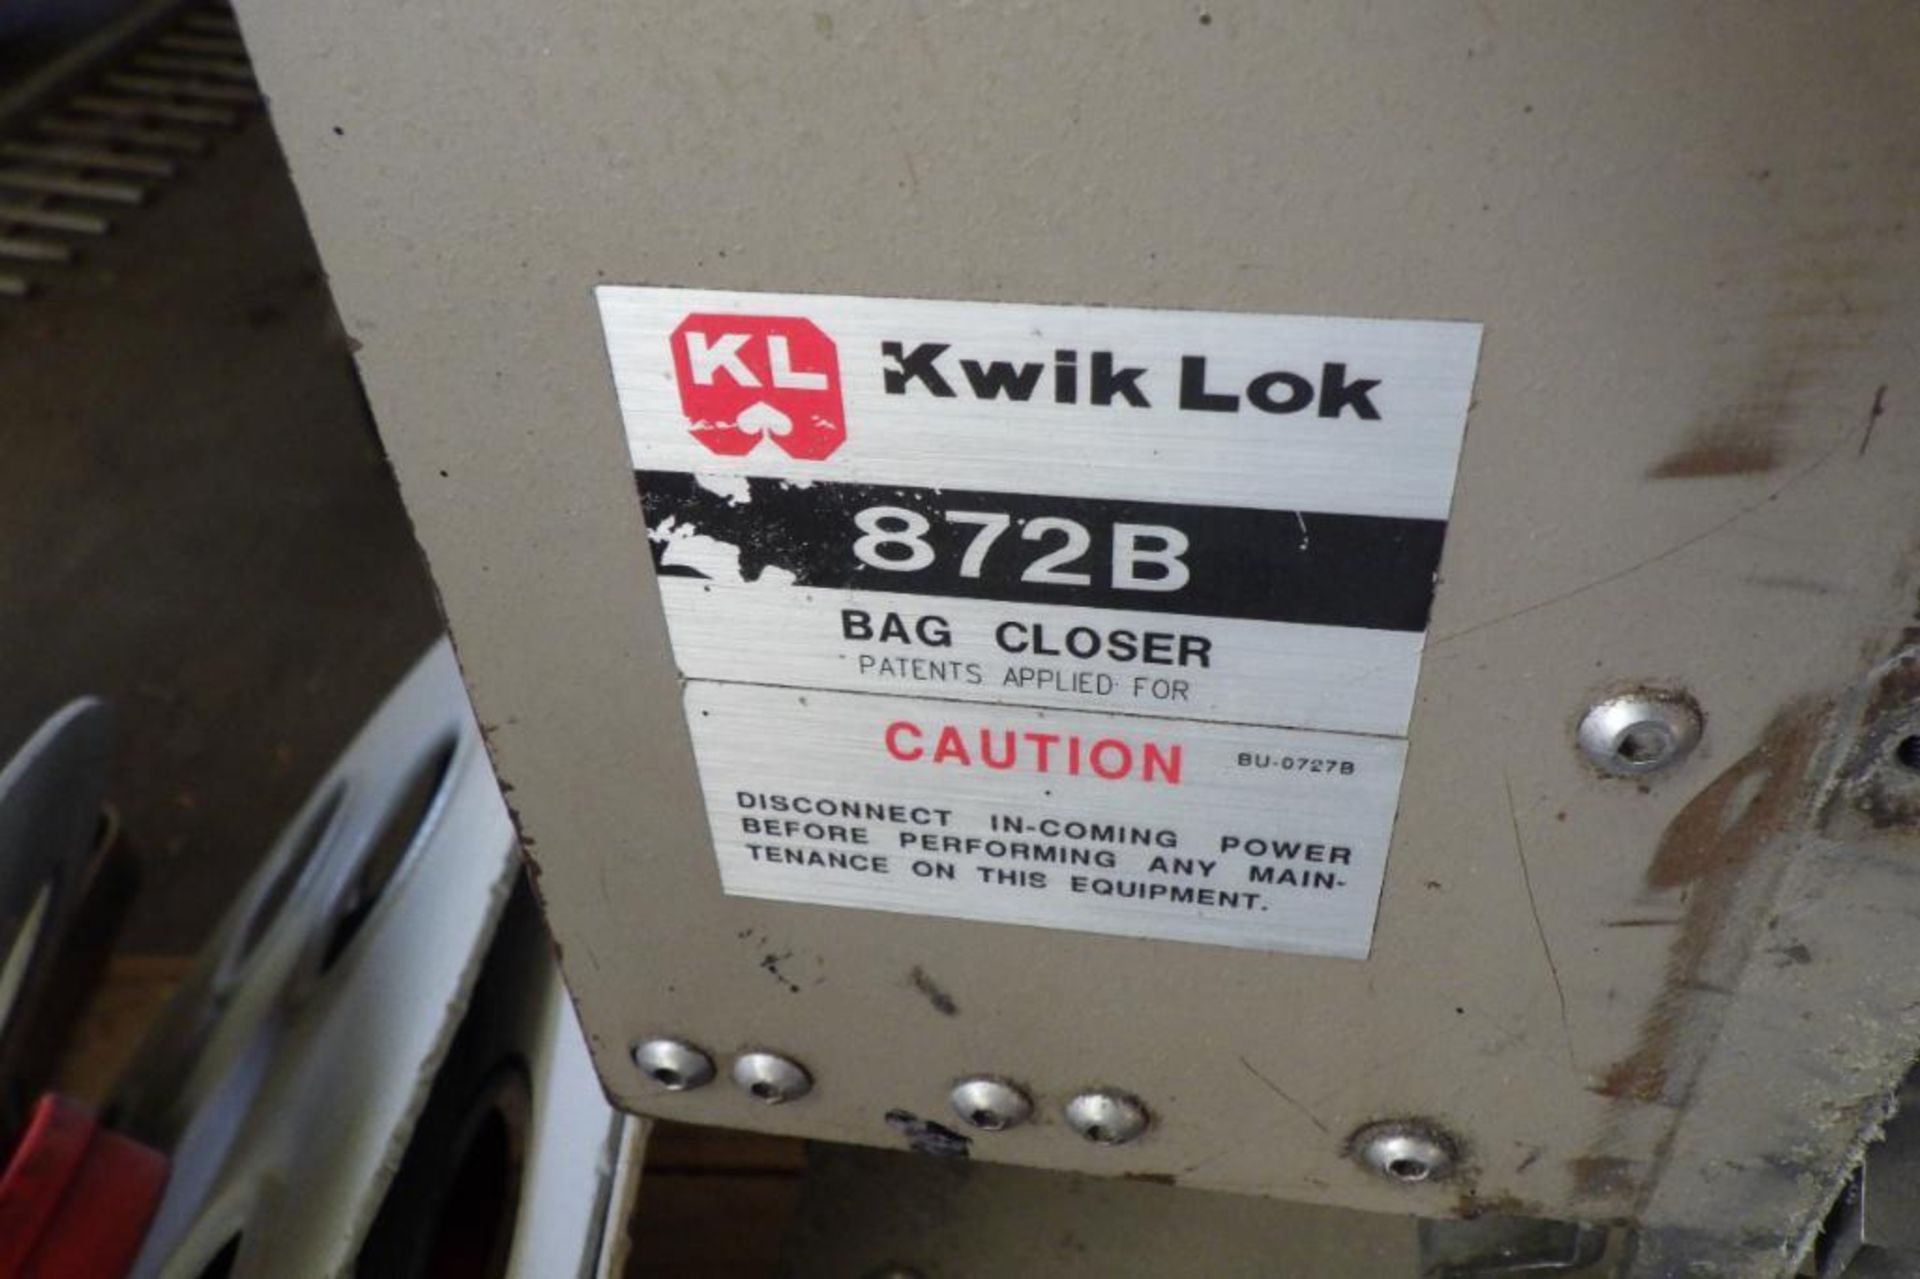 Kwik Lok bag closers - Image 5 of 8